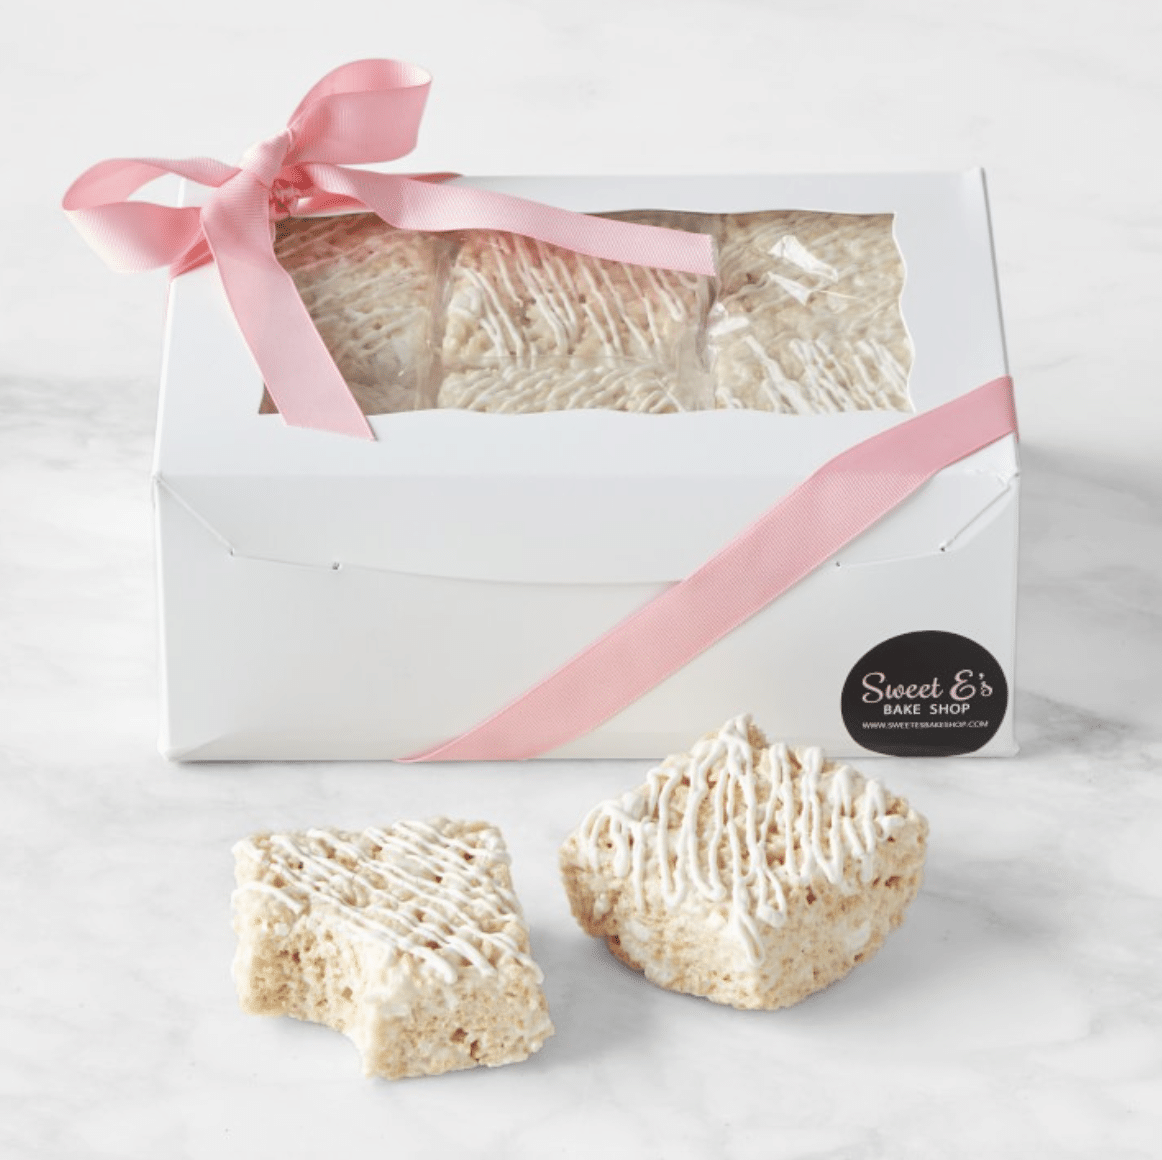 Williams-Sonoma rice krispy treats for Valentine's Day gift ideas - 